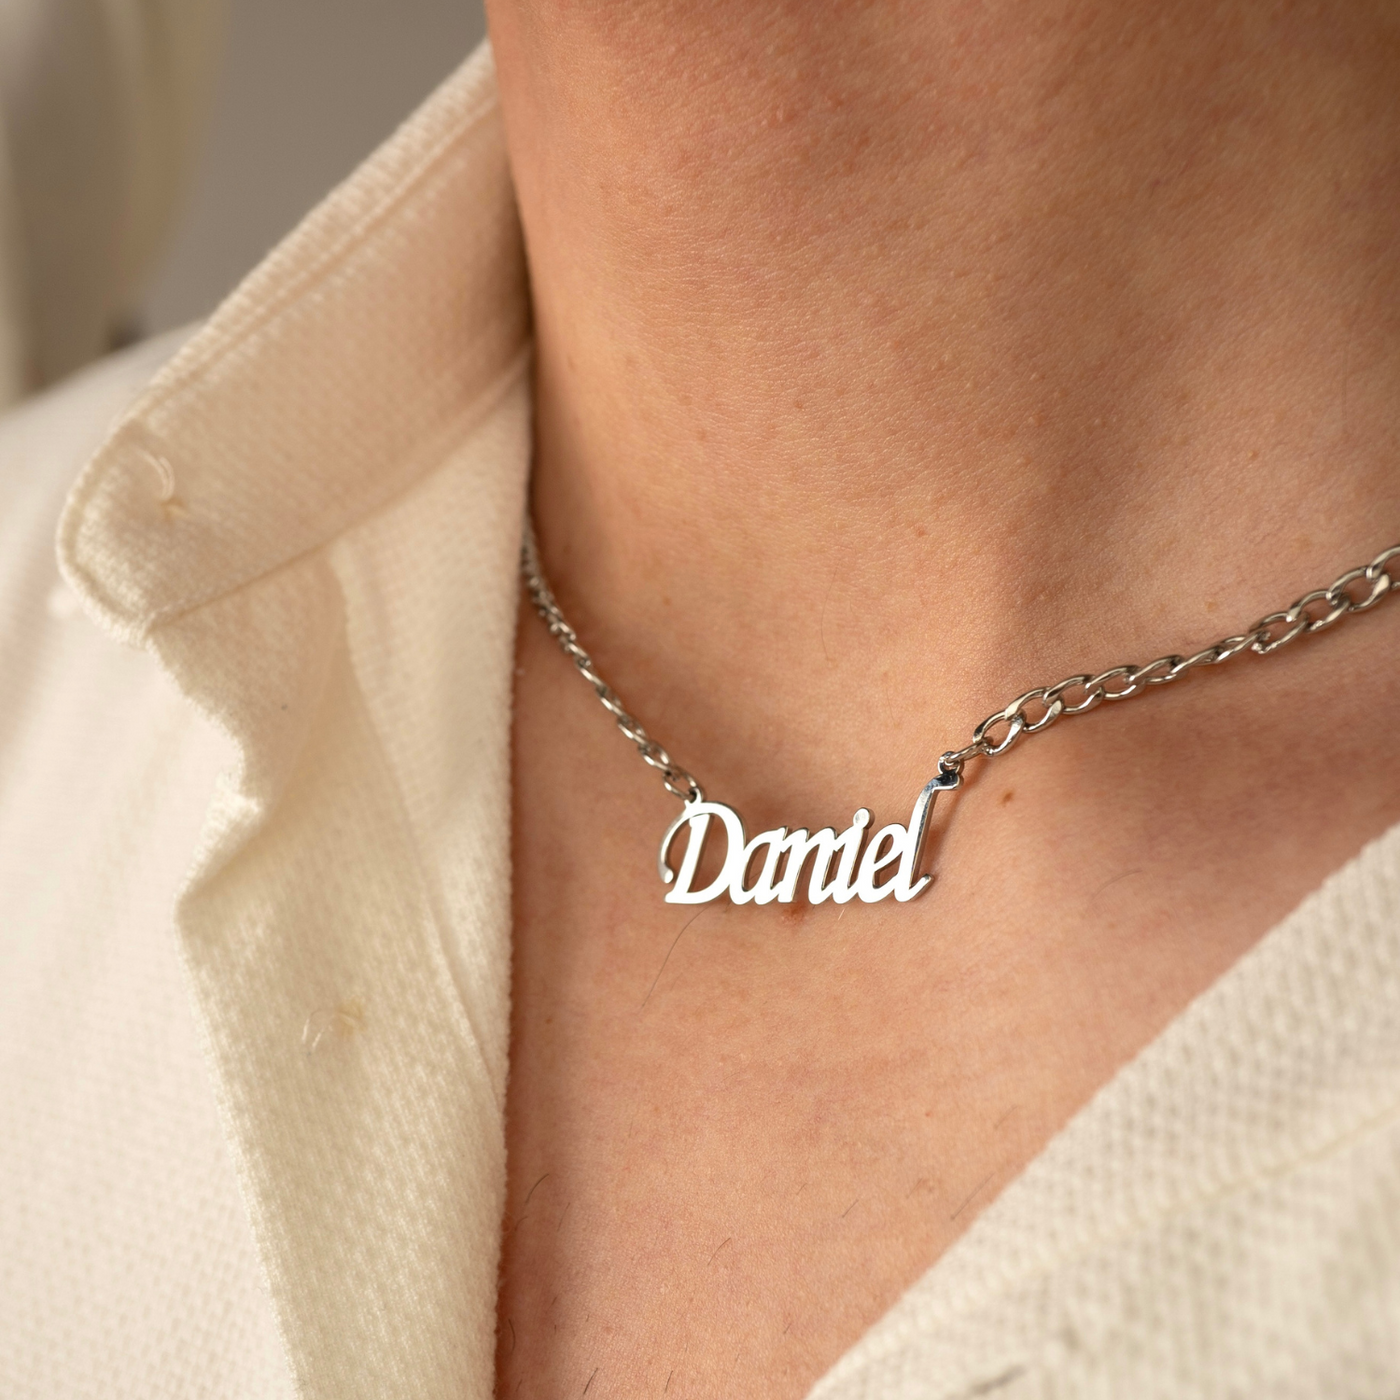 Men's name necklace - Var. Monotype